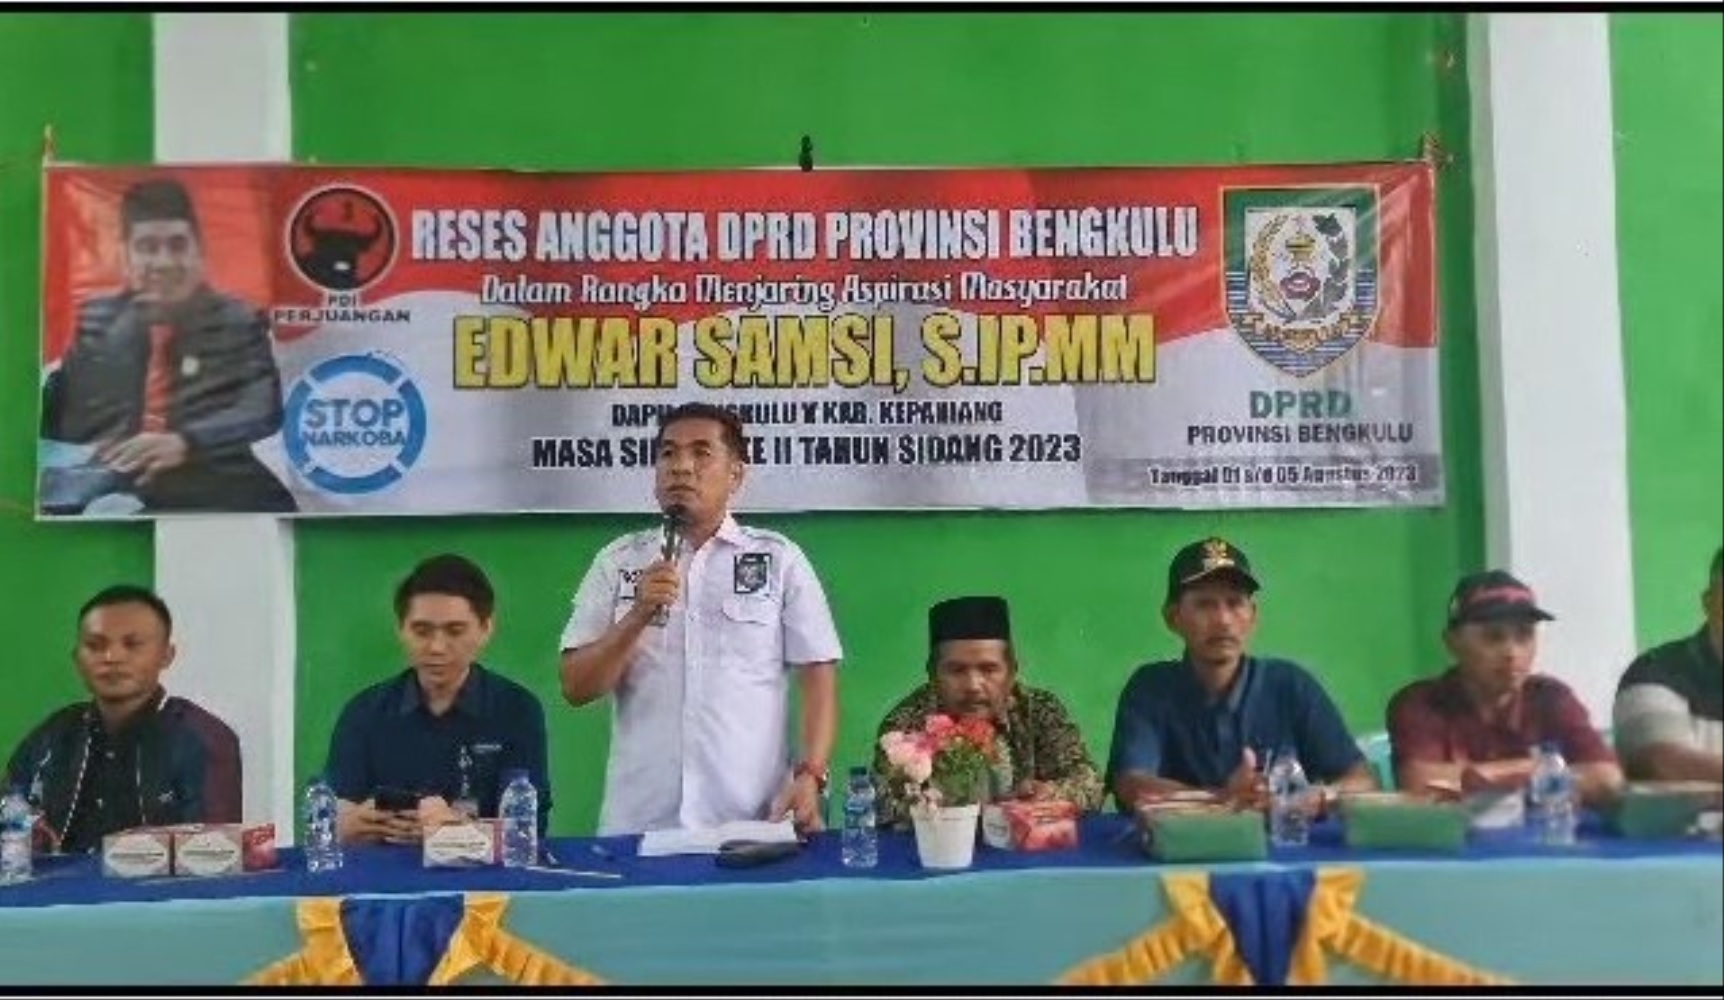 Hari Kedua Reses di Desa Bandung Jaya, Anggota DPRD Prov Edwar Samsi Paparkan Program BPJS Kesehatan